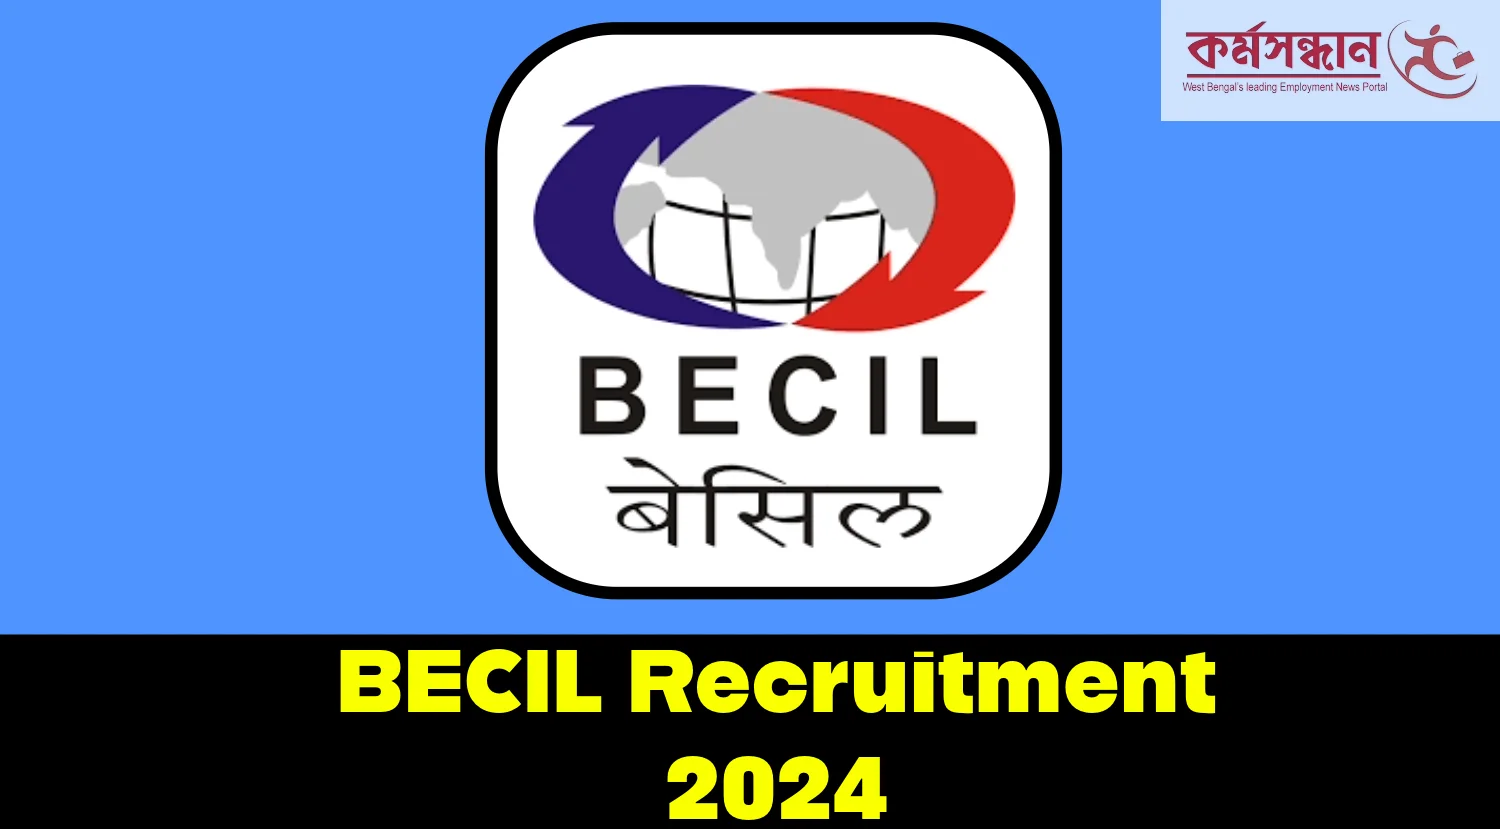 BECIL Recruitment 2024 for Various Vacancies, Check Details